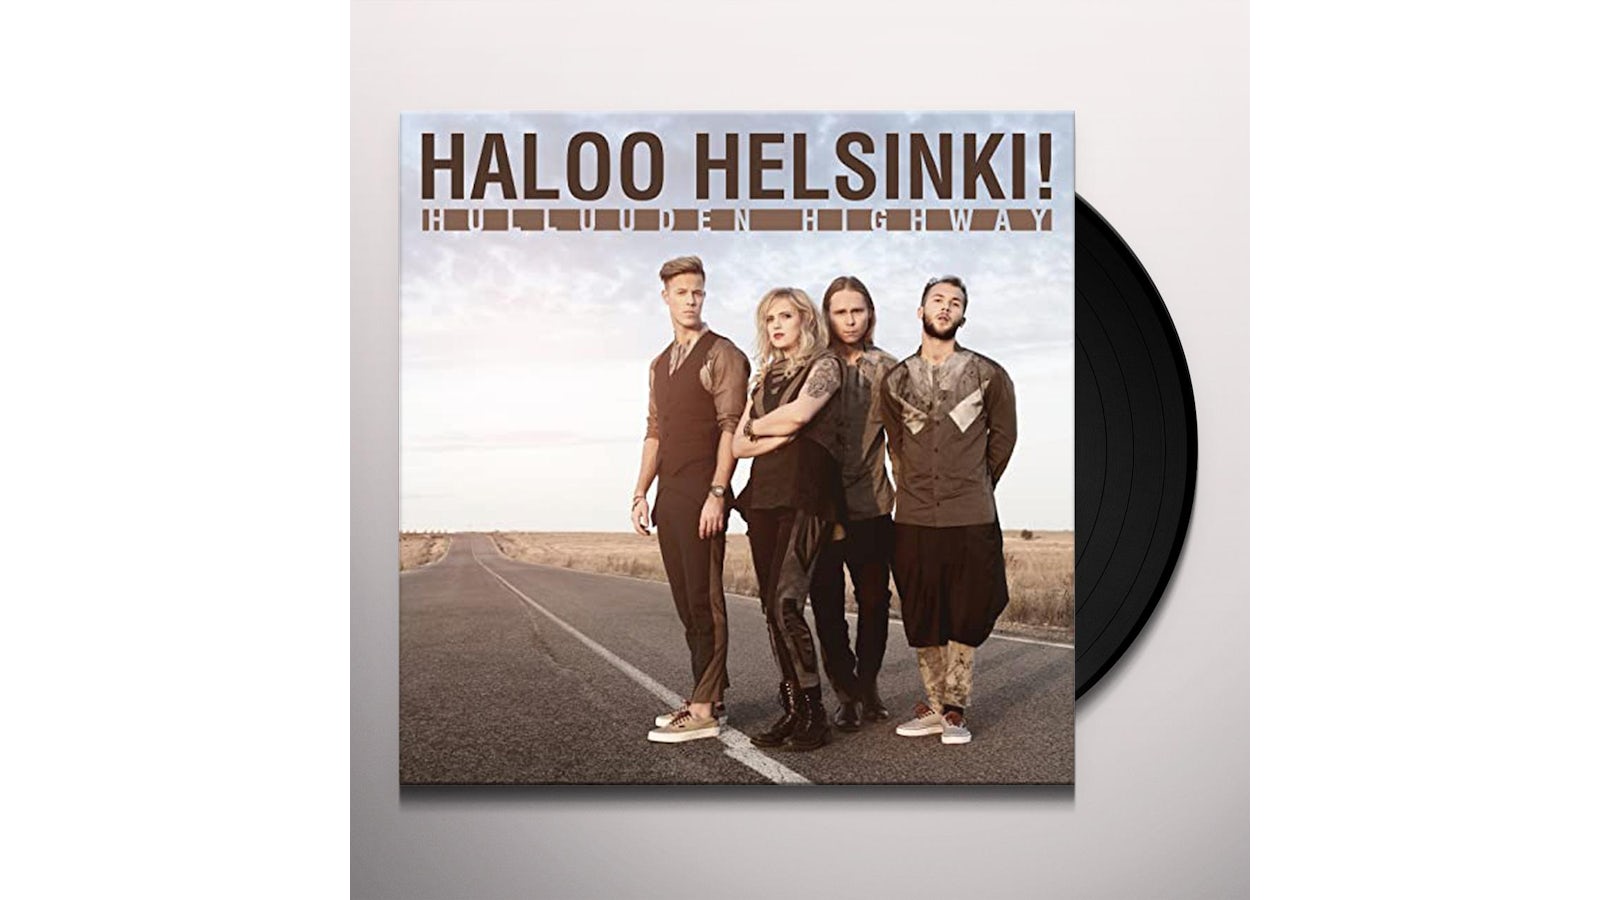 Haloo Helsinki! HULLUUDEN HIGHWAY Vinyl Record